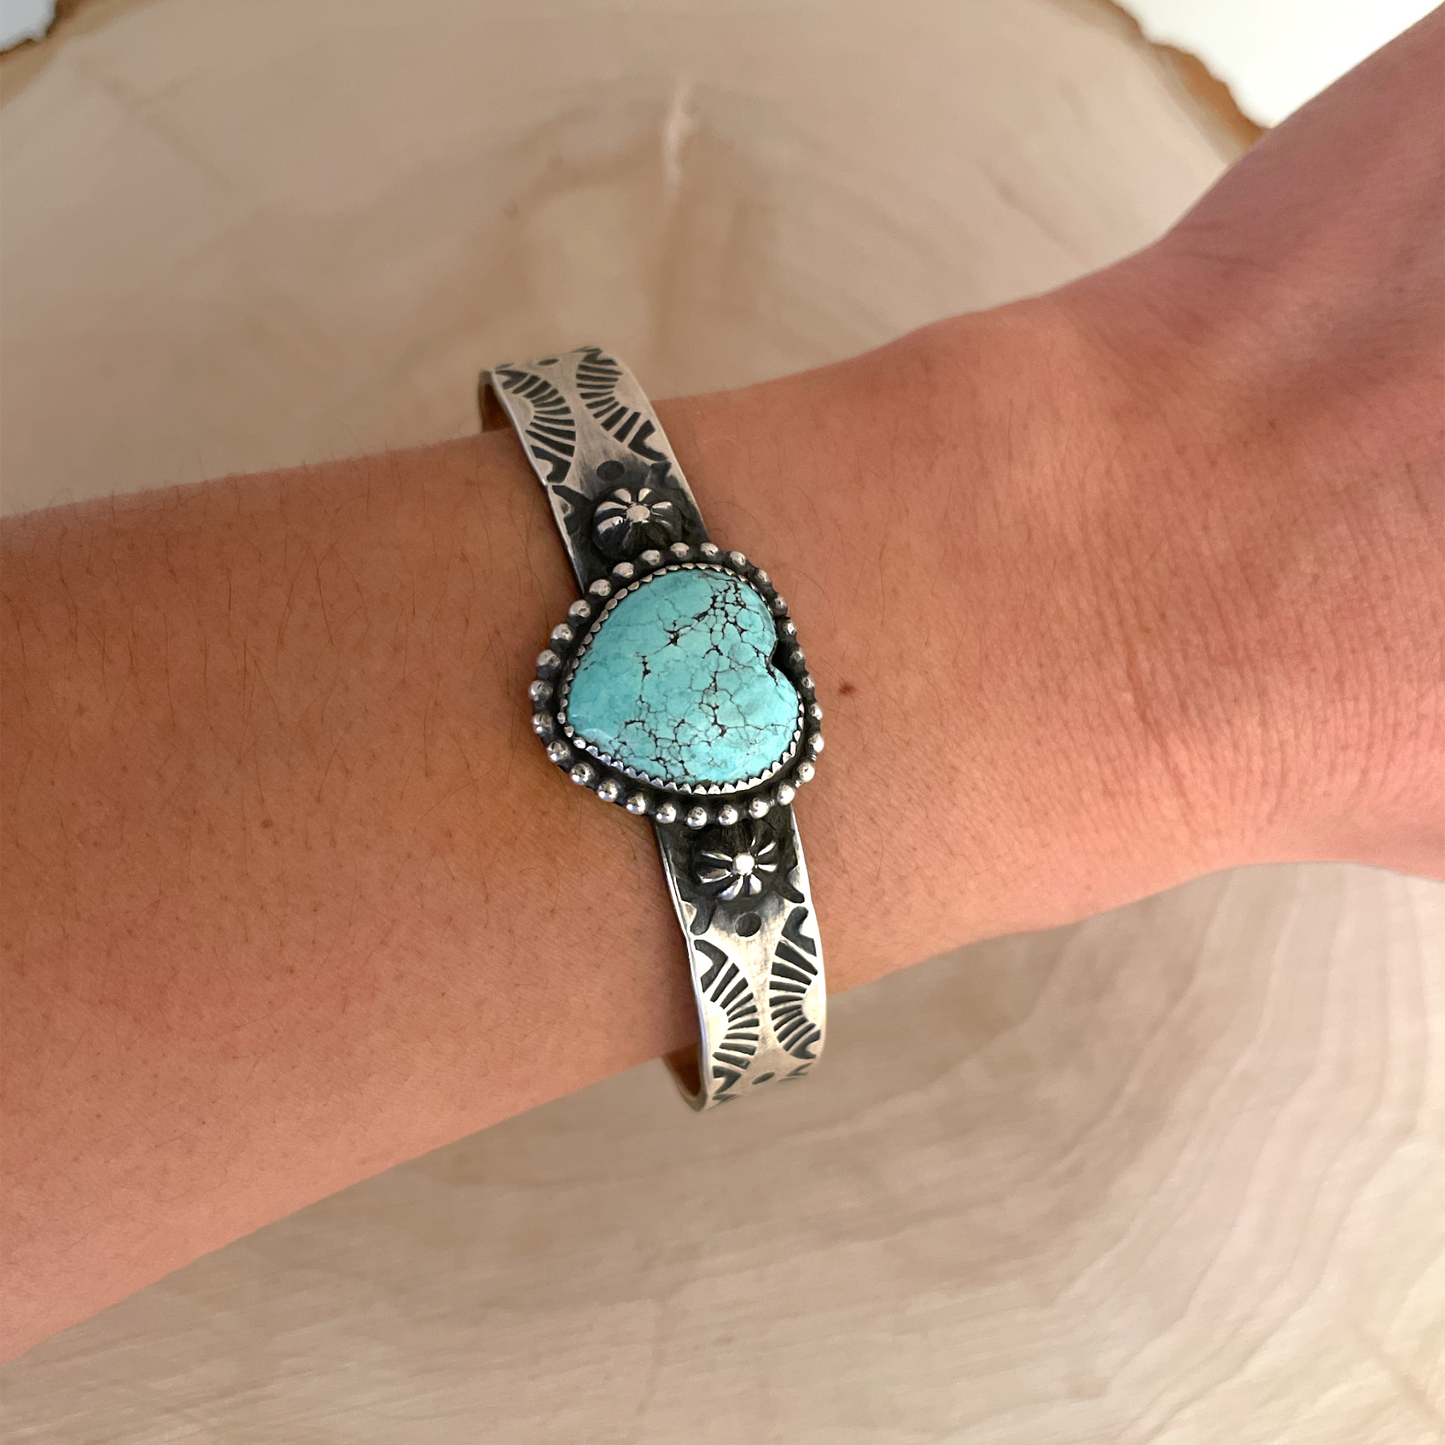 Turquoise Heart Cuff Bracelet By Kinsley Natoni Size 5.75"